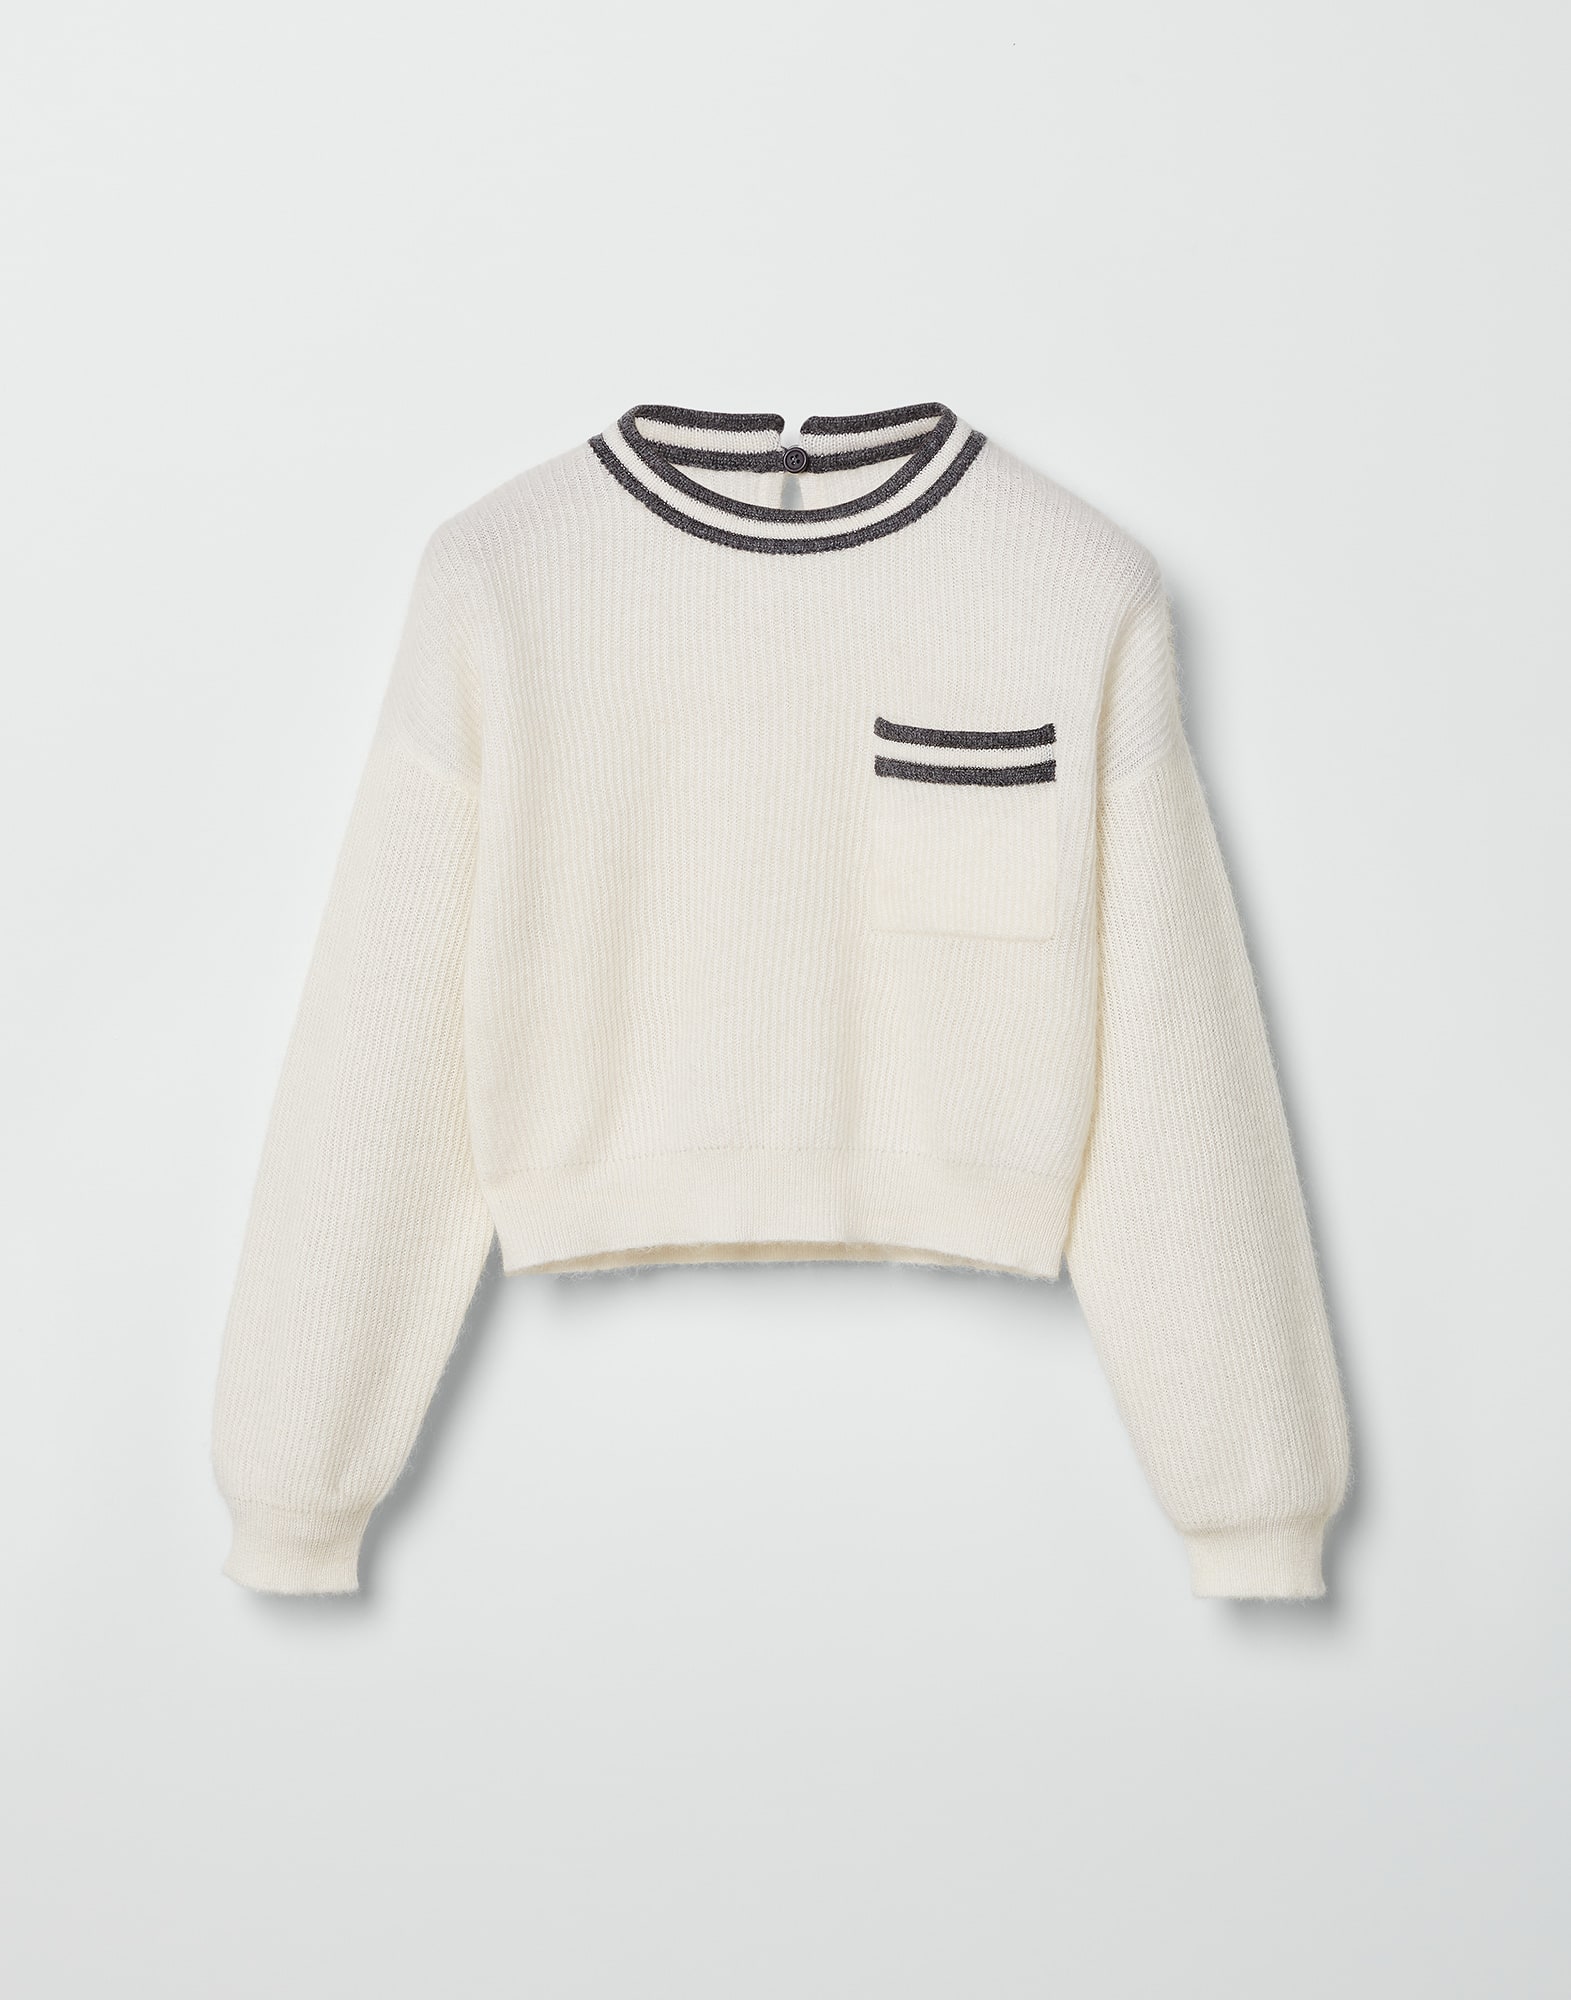 Alpaca and cotton sweater